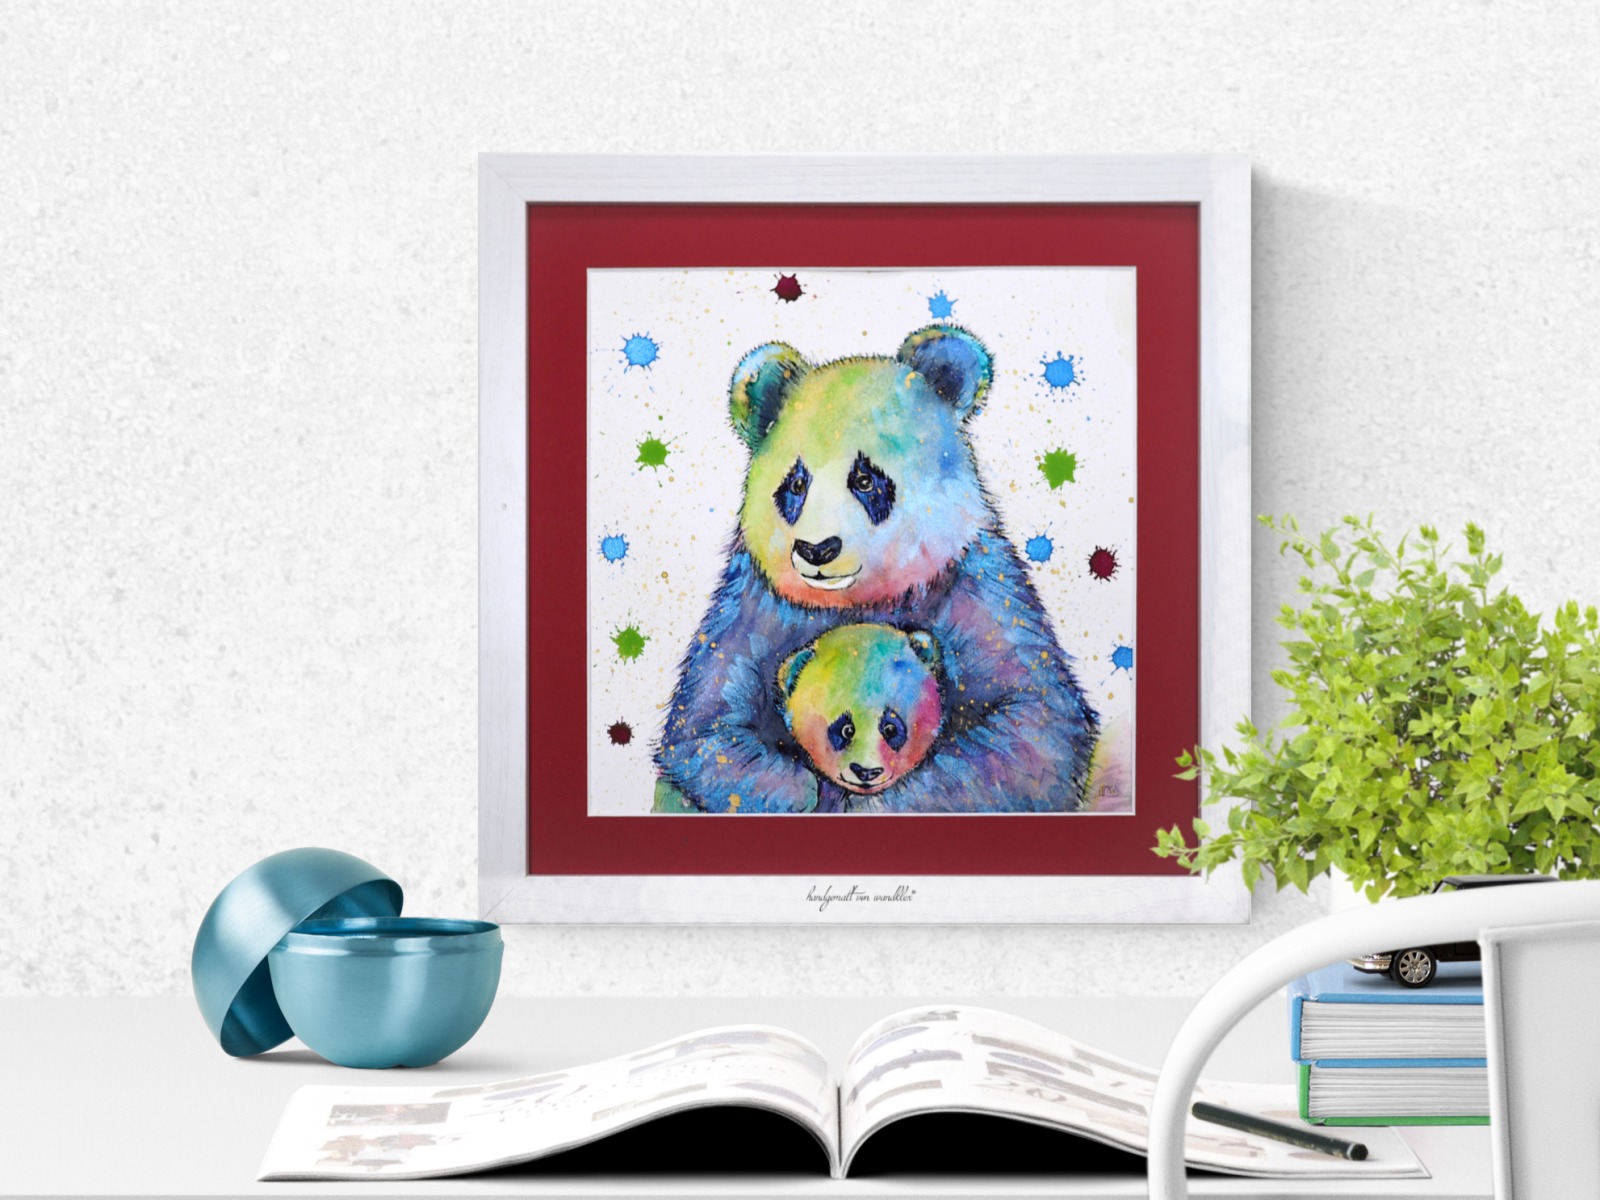 Buntfug-Pandafamilie Aquarell gerahmtes handgemalte Original, Tierbild, Einzelstück, Rahmenfarbe